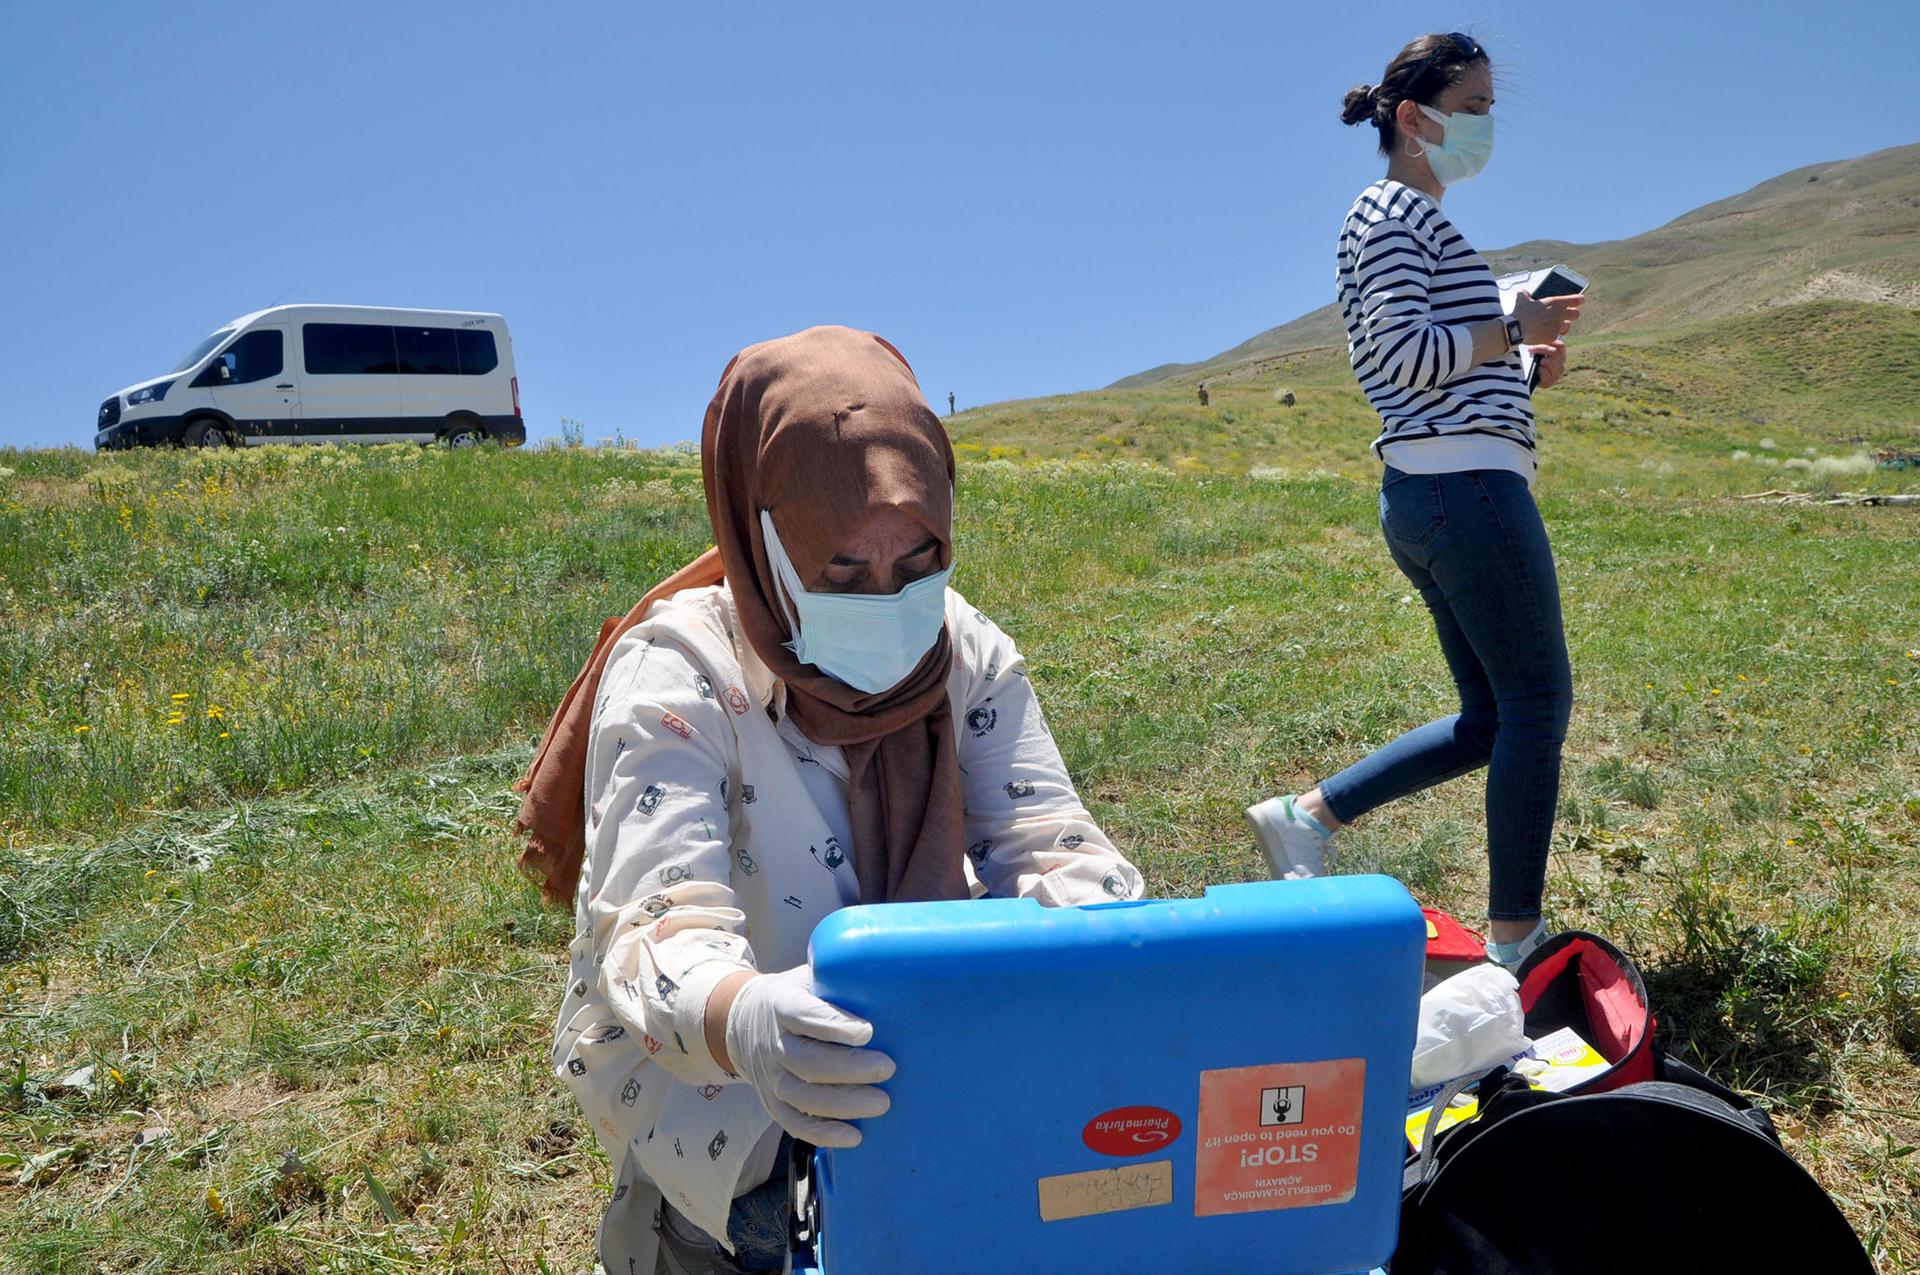 A health worker unloads equipment to vaccinate sheepherders in Ömerova, a village in Turkey’s eastern Kurdish region.